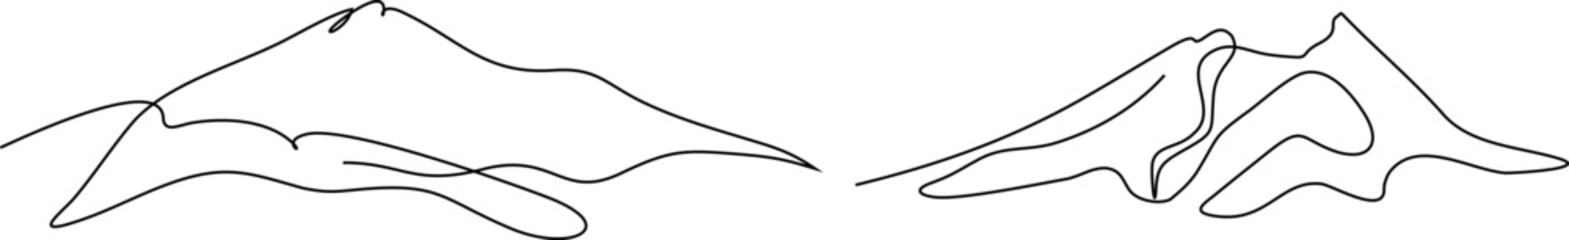 mountain continuous line set illustration